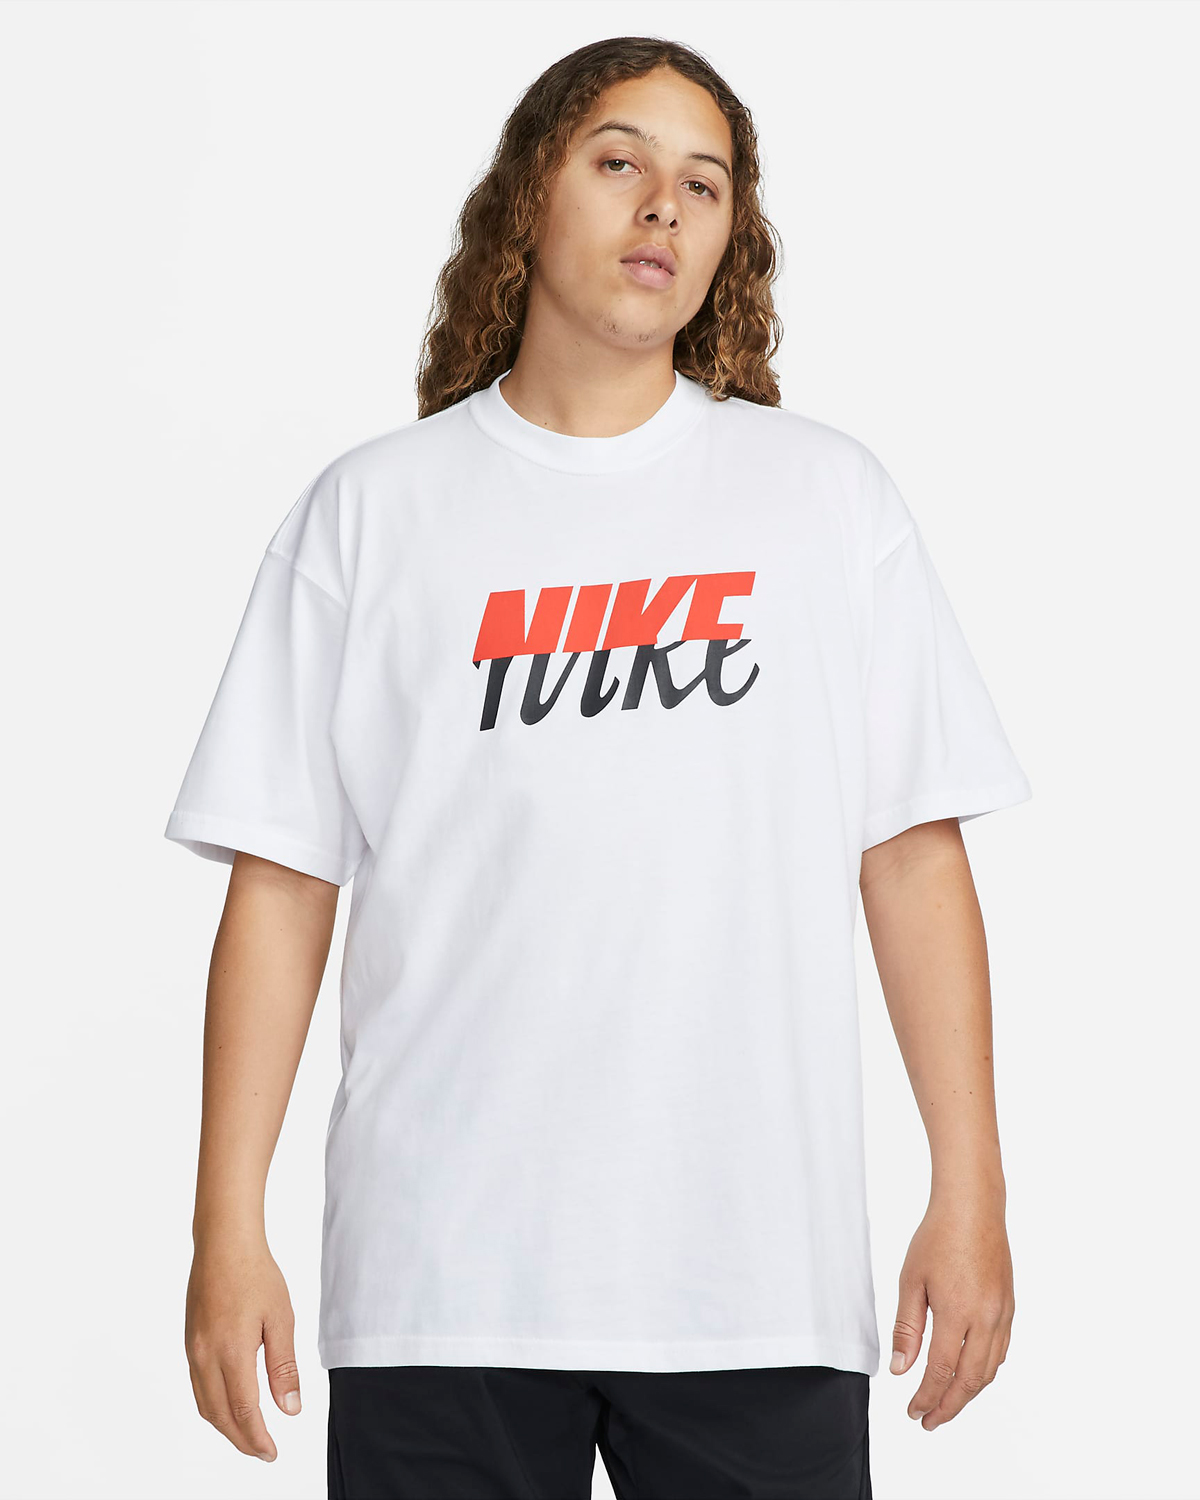 Nike-Sportswear-Split-T-Shirt-White-Red-Black